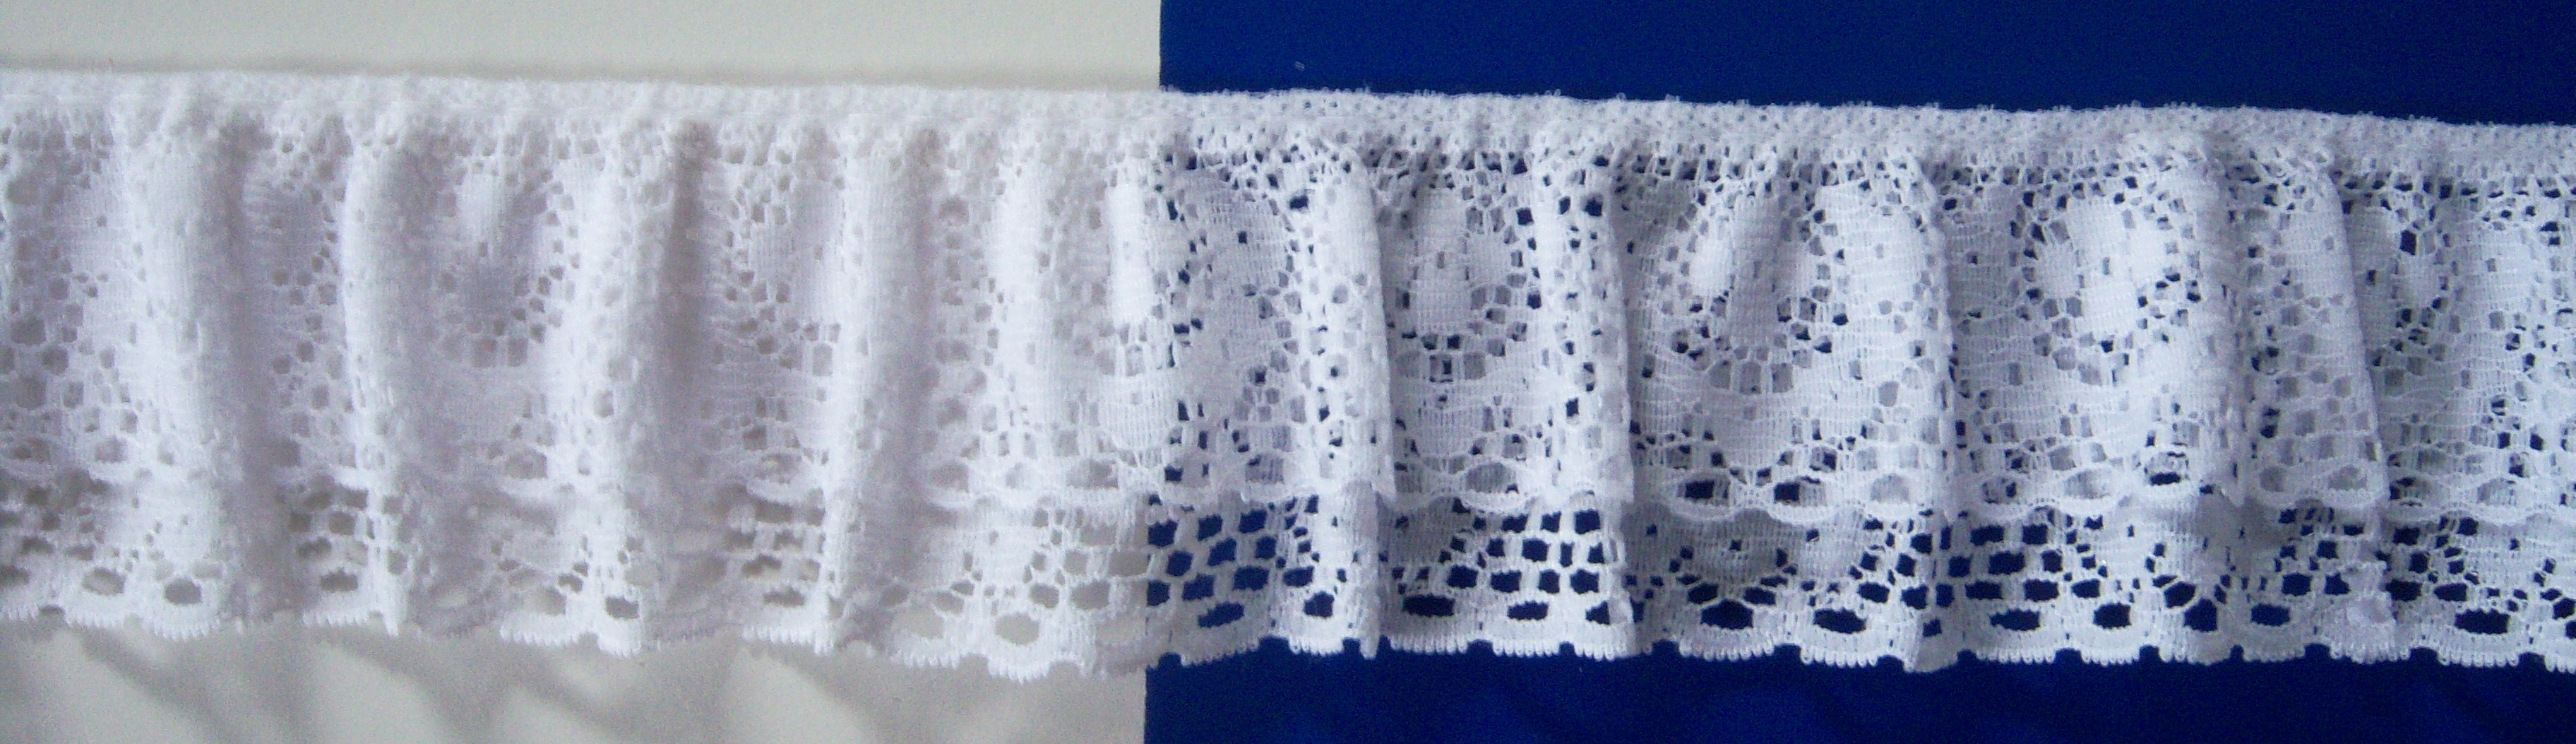 White/White 2" Double Gathered Lace